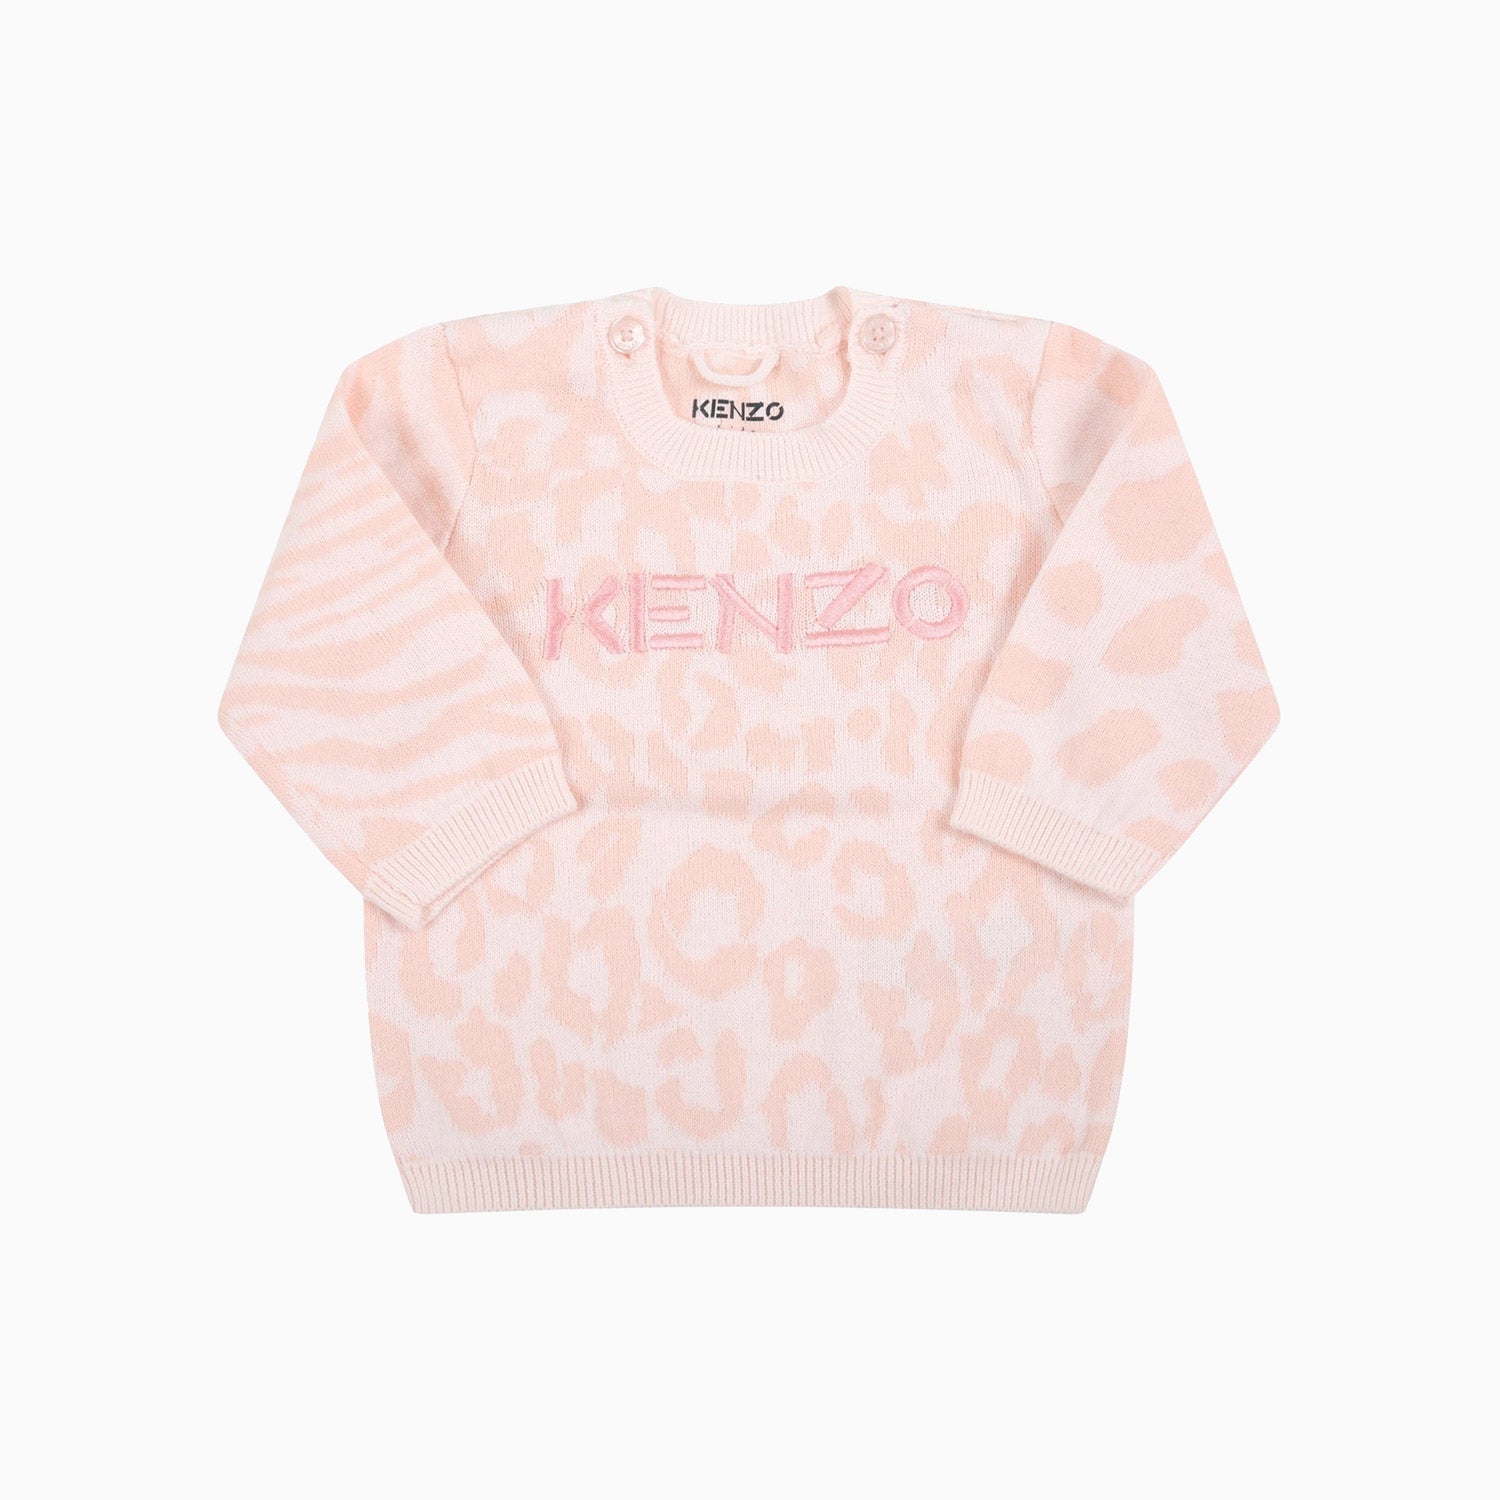 kenzo-kids-animal-print-outfit-k98013-454